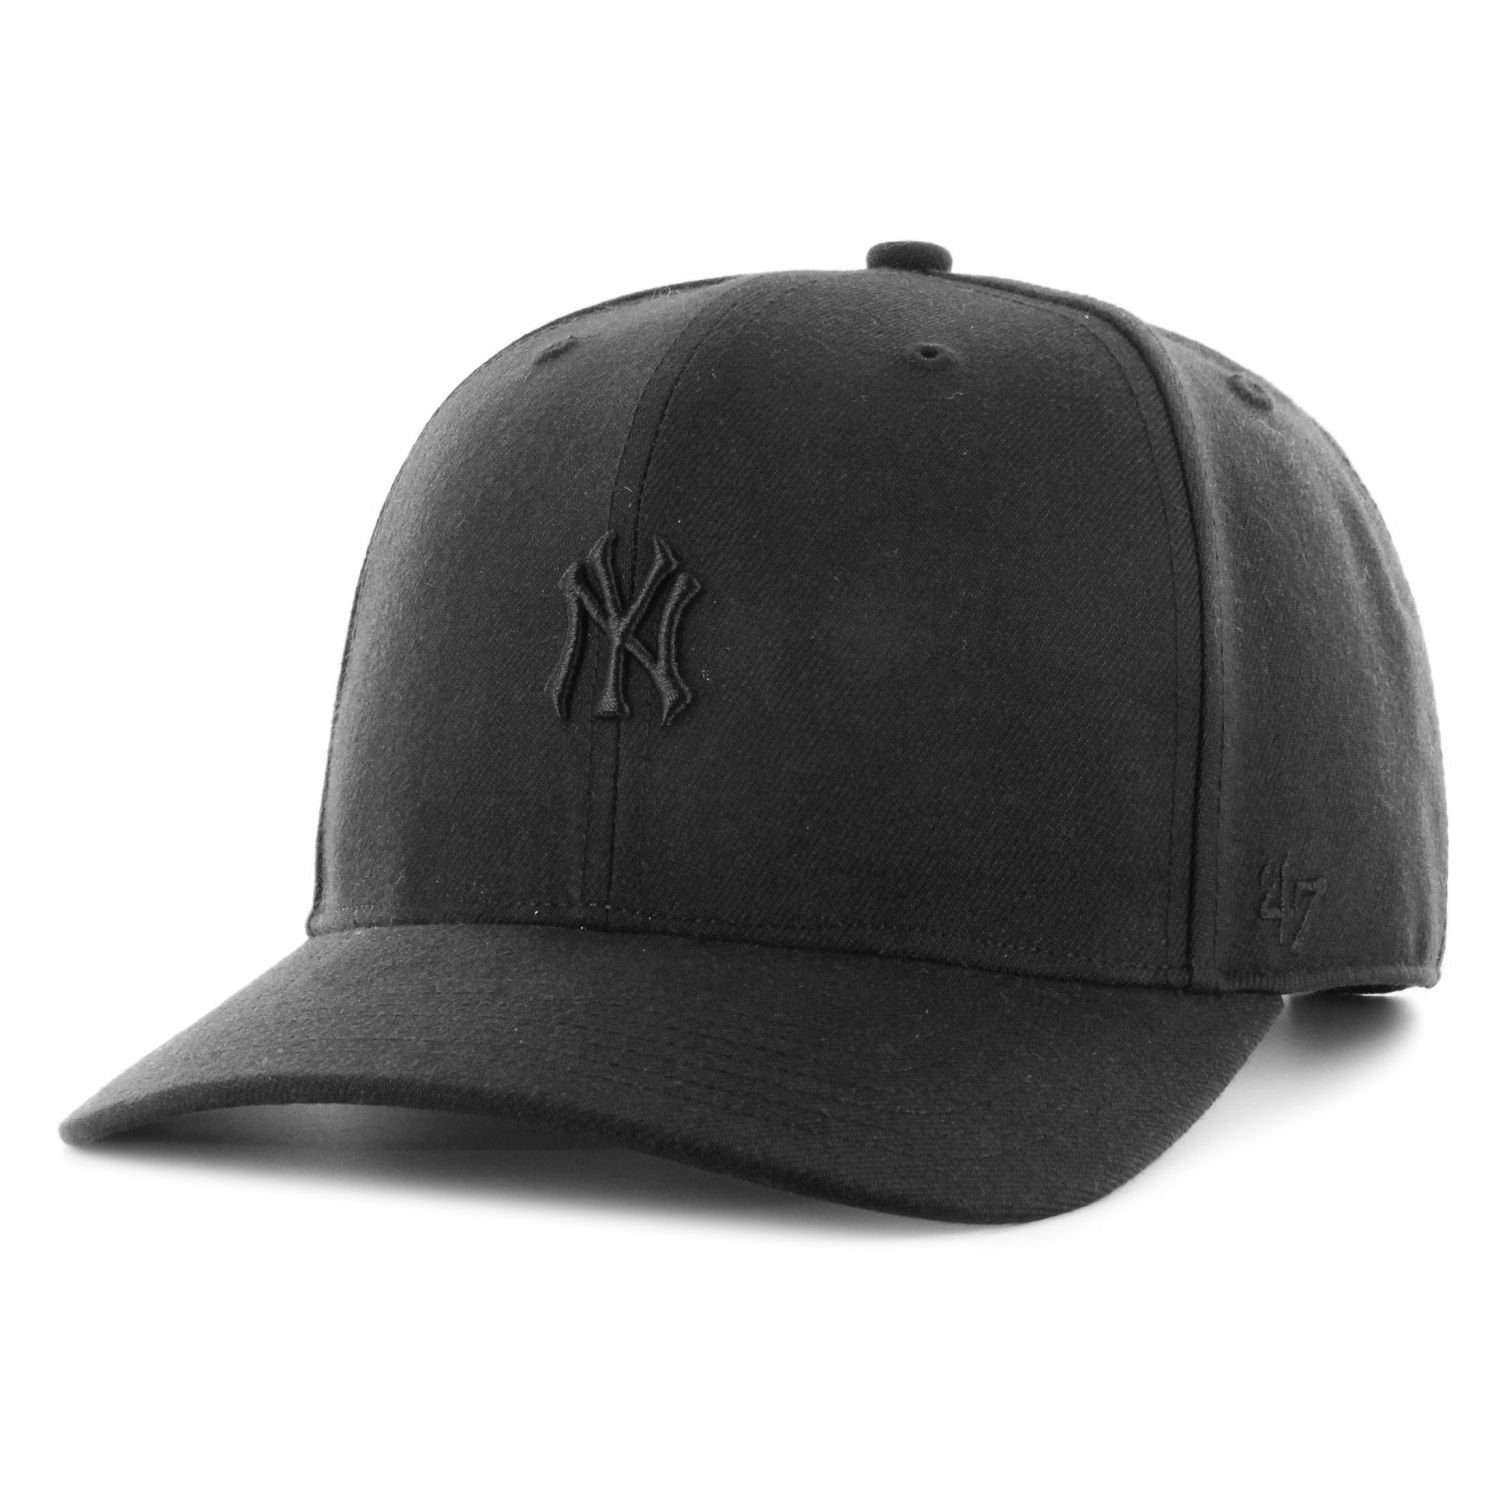 New Brand Deep Cap York Profile Yankees RUNNER '47 BASE Snapback